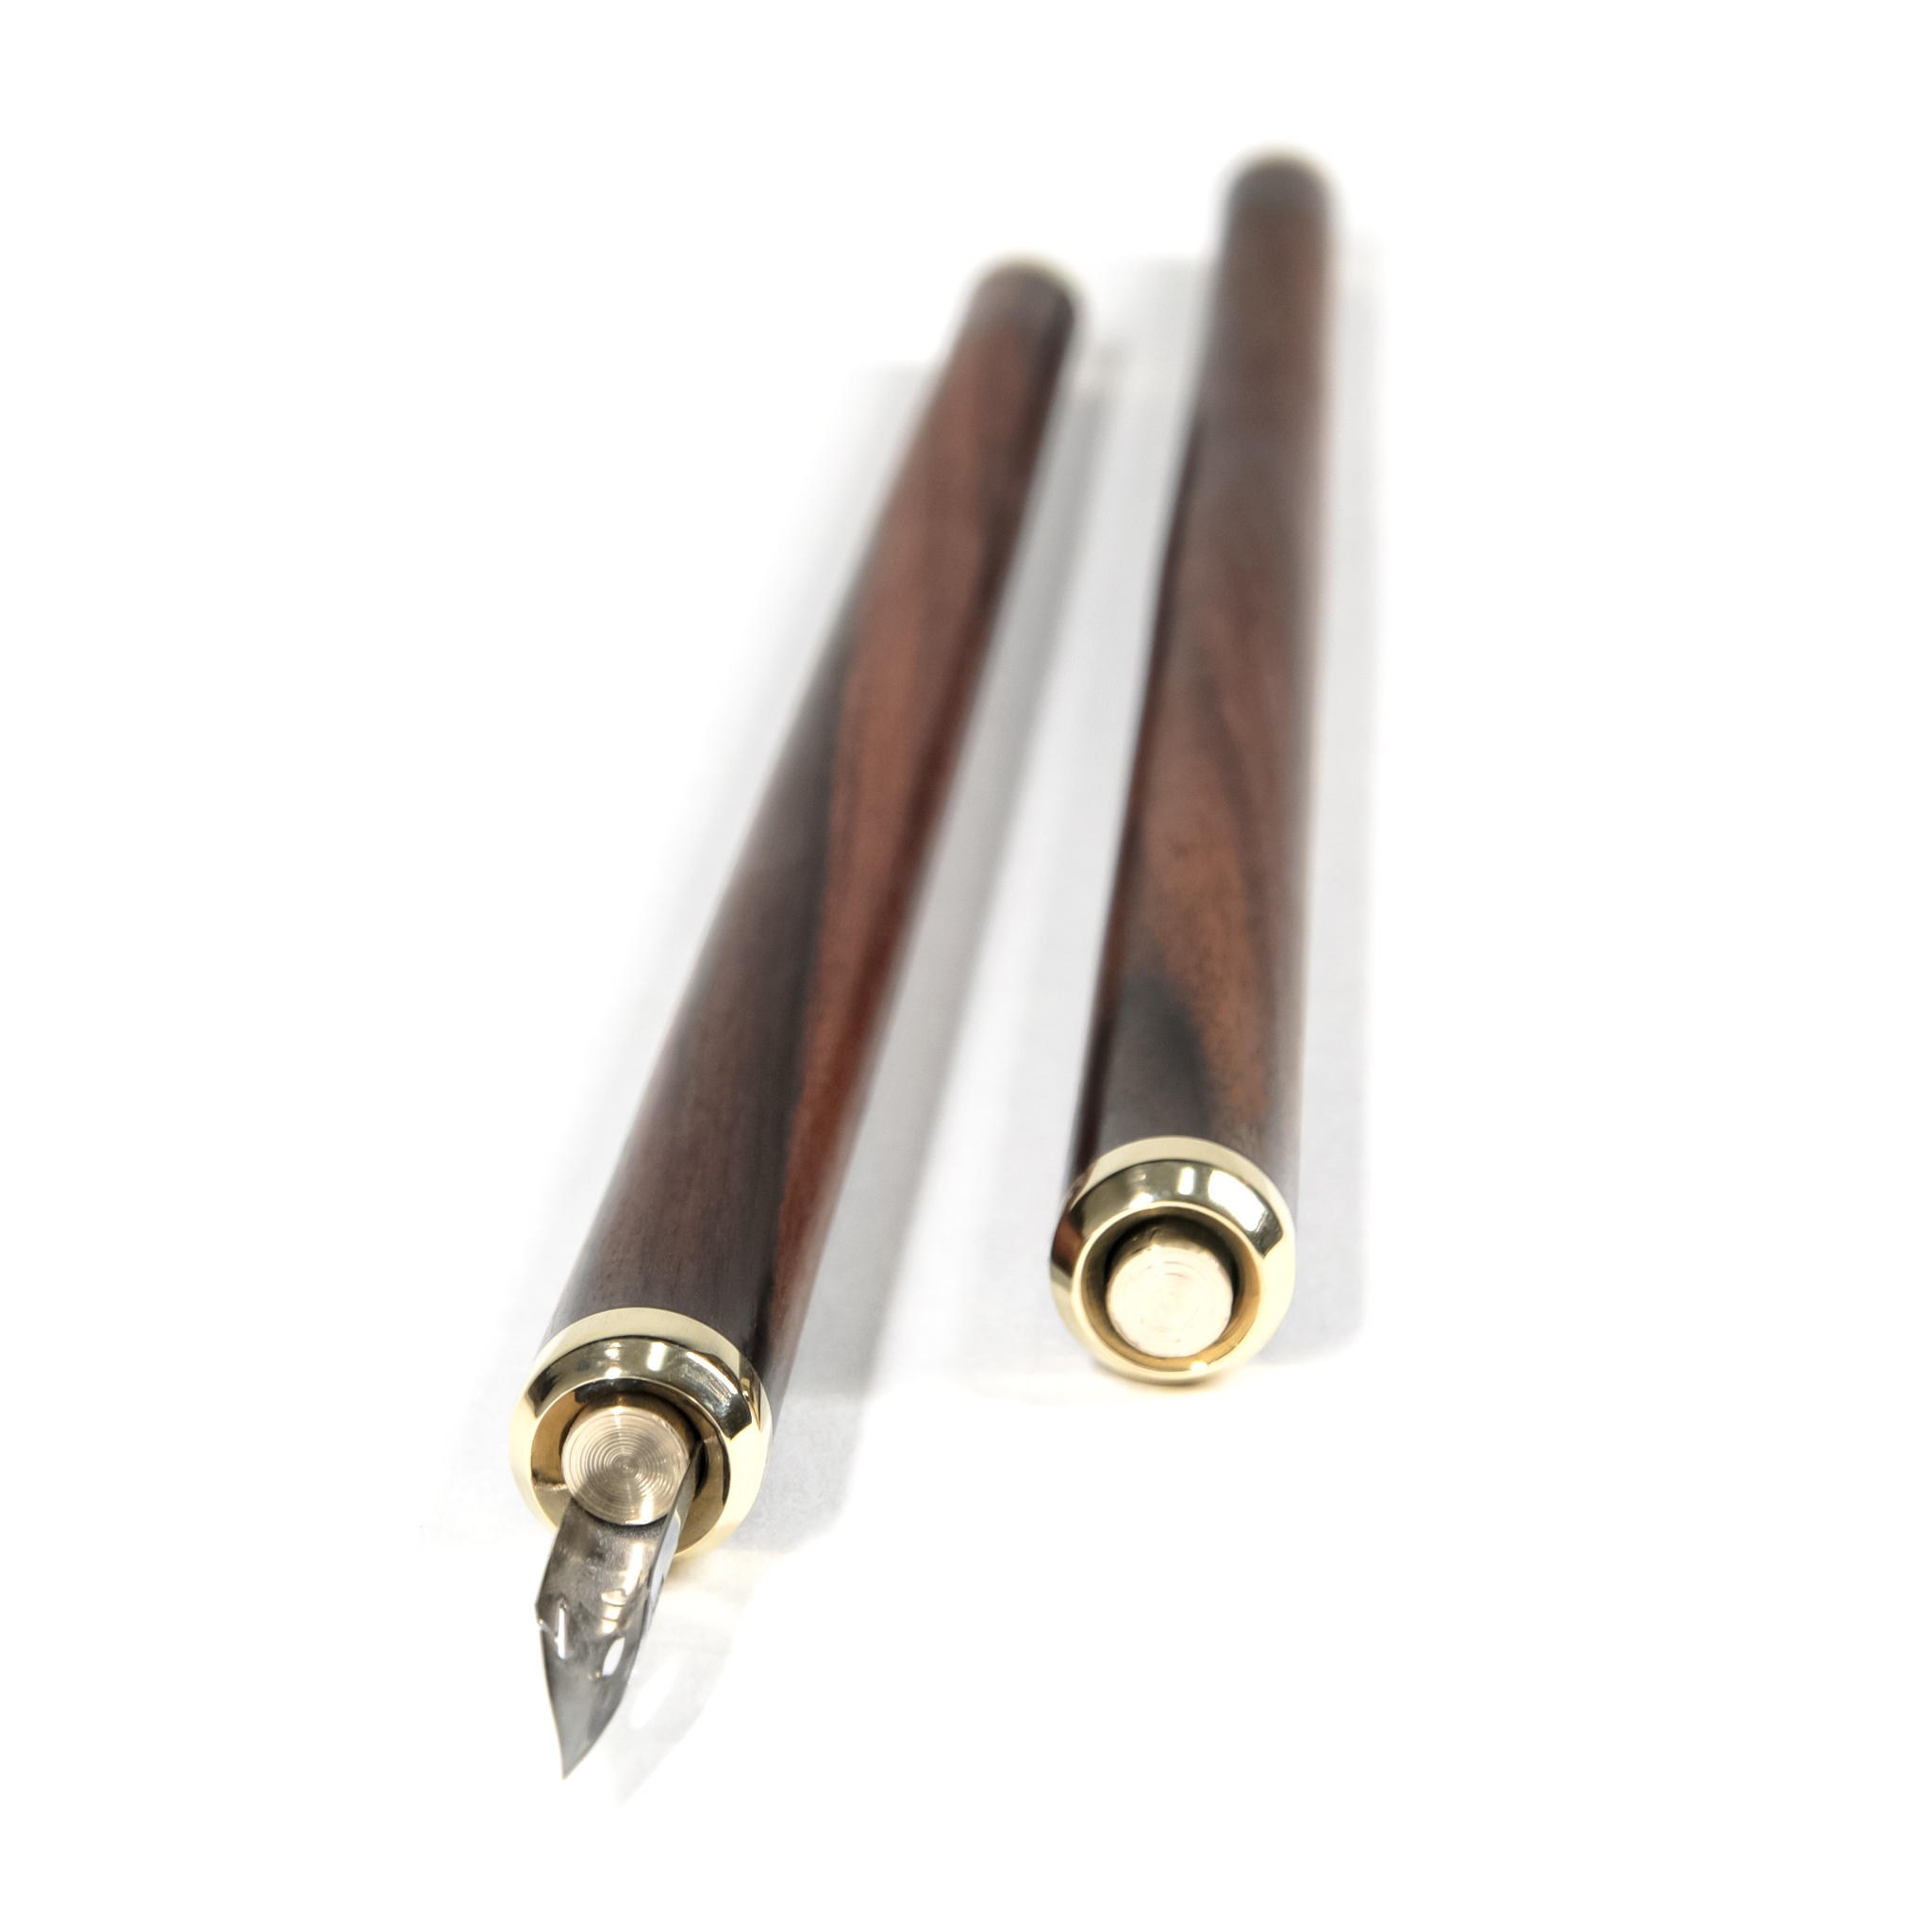 Rosewood- Straight Calligraphy Pen  Calligraphy pen, custom pen, wood pen  – AbleSnail